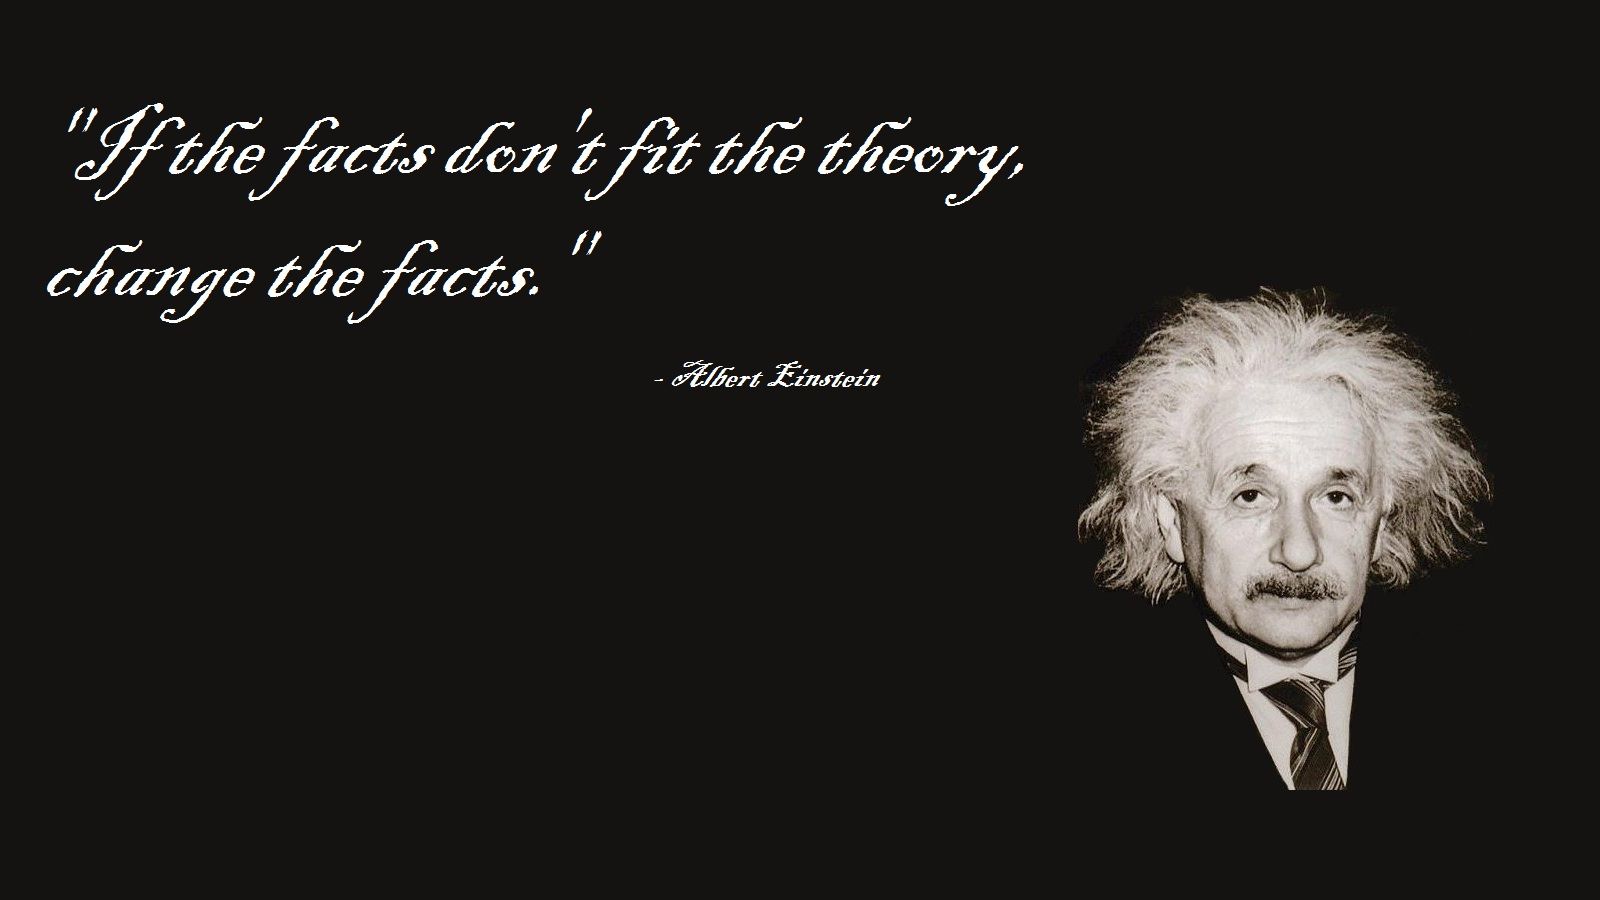 Einstein Quotes Wallpaper. QuotesGram